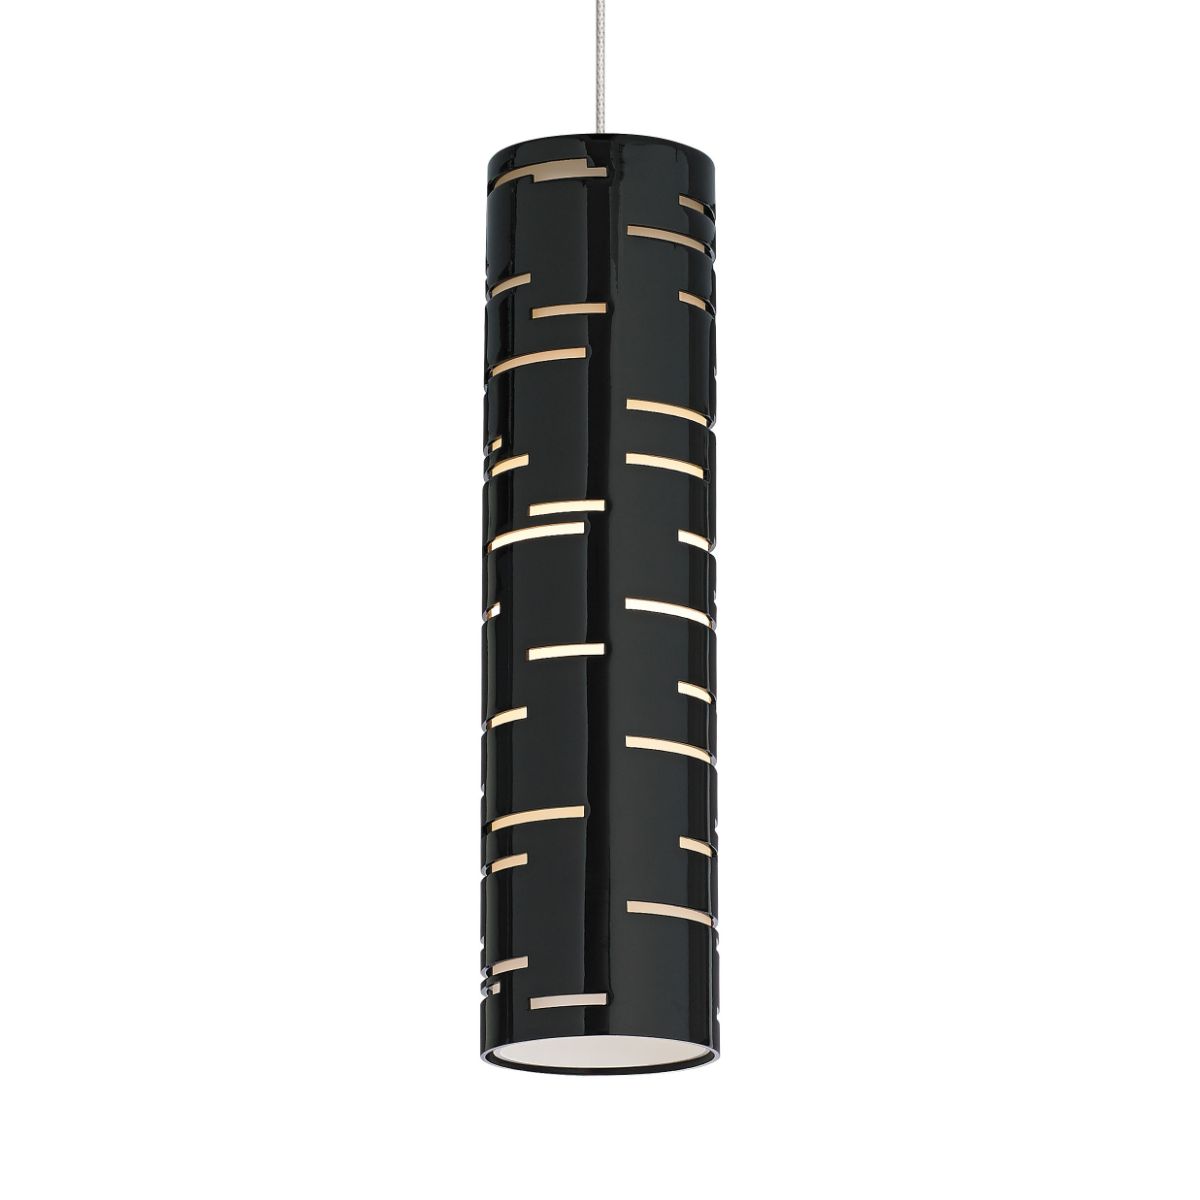 Revel Pendant Light MonoRail Black|Bronze Finish